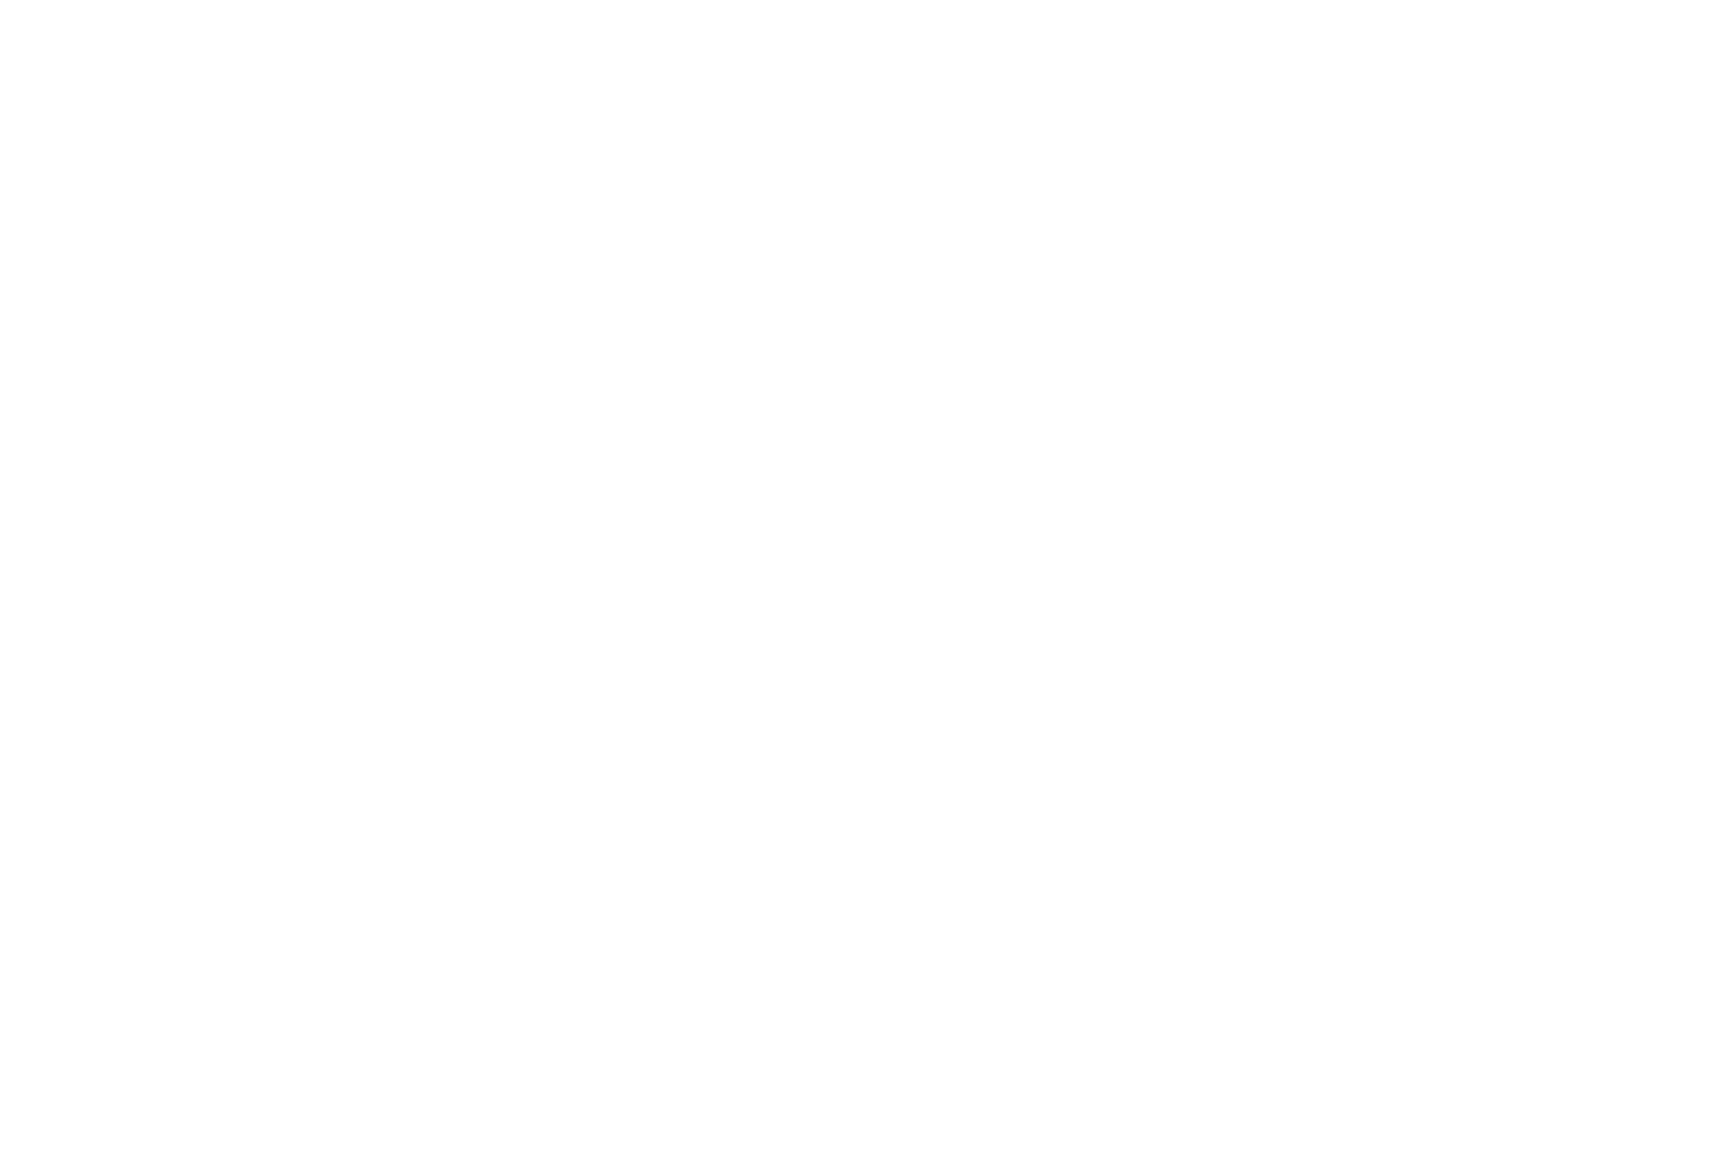 WINNER BEST DRAMA - NYC Indie Film Awards - October 2017.png